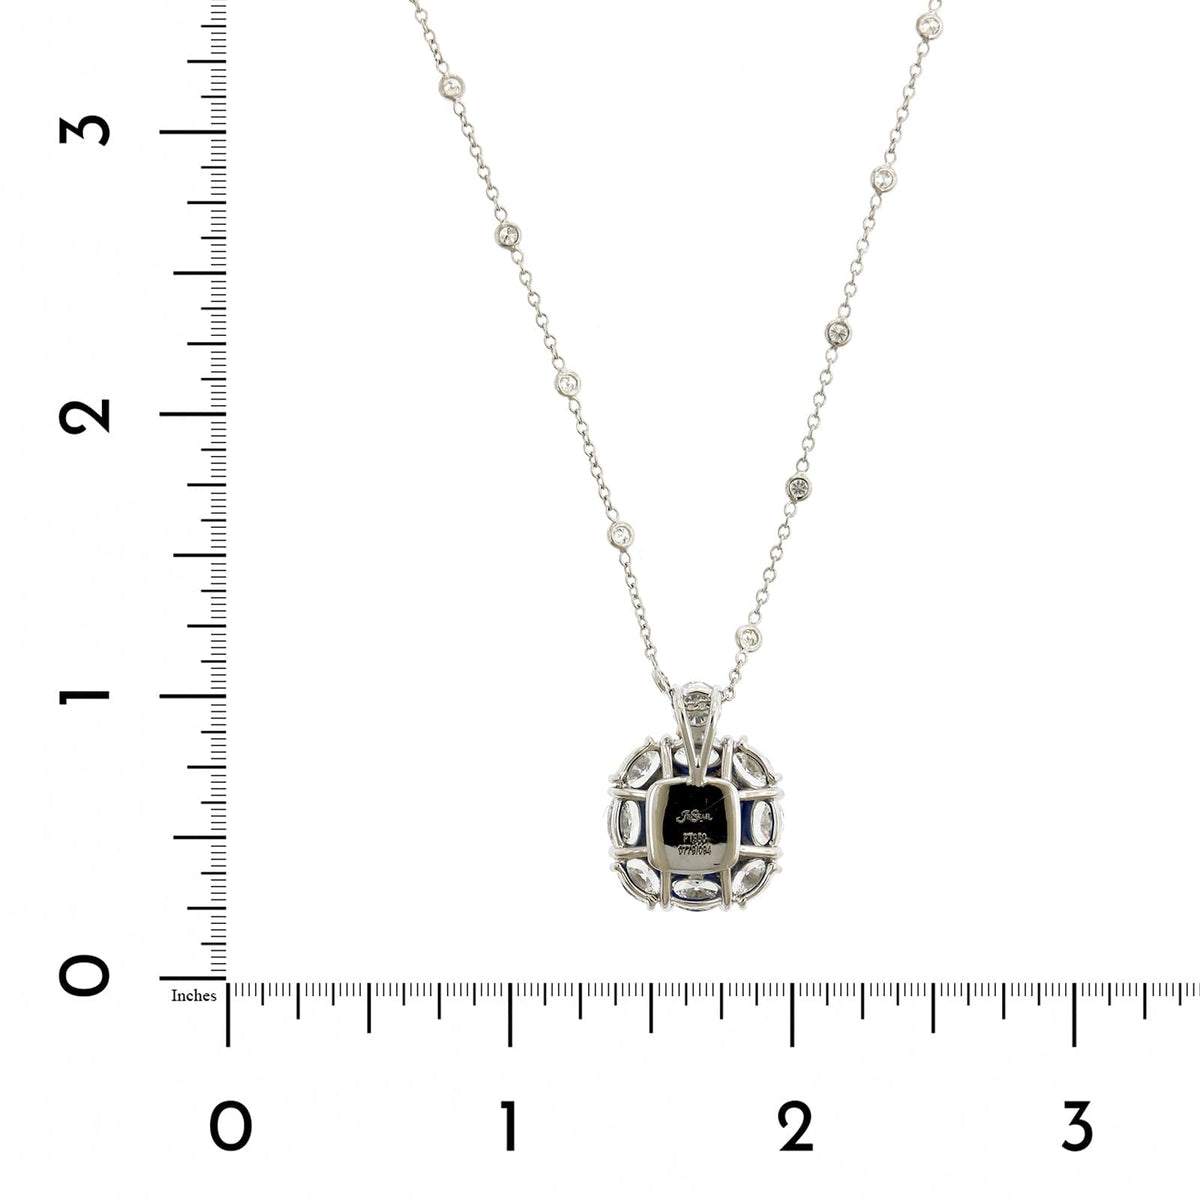 Platinum Cushion Sapphire Diamonds By The Yard Halo Necklace